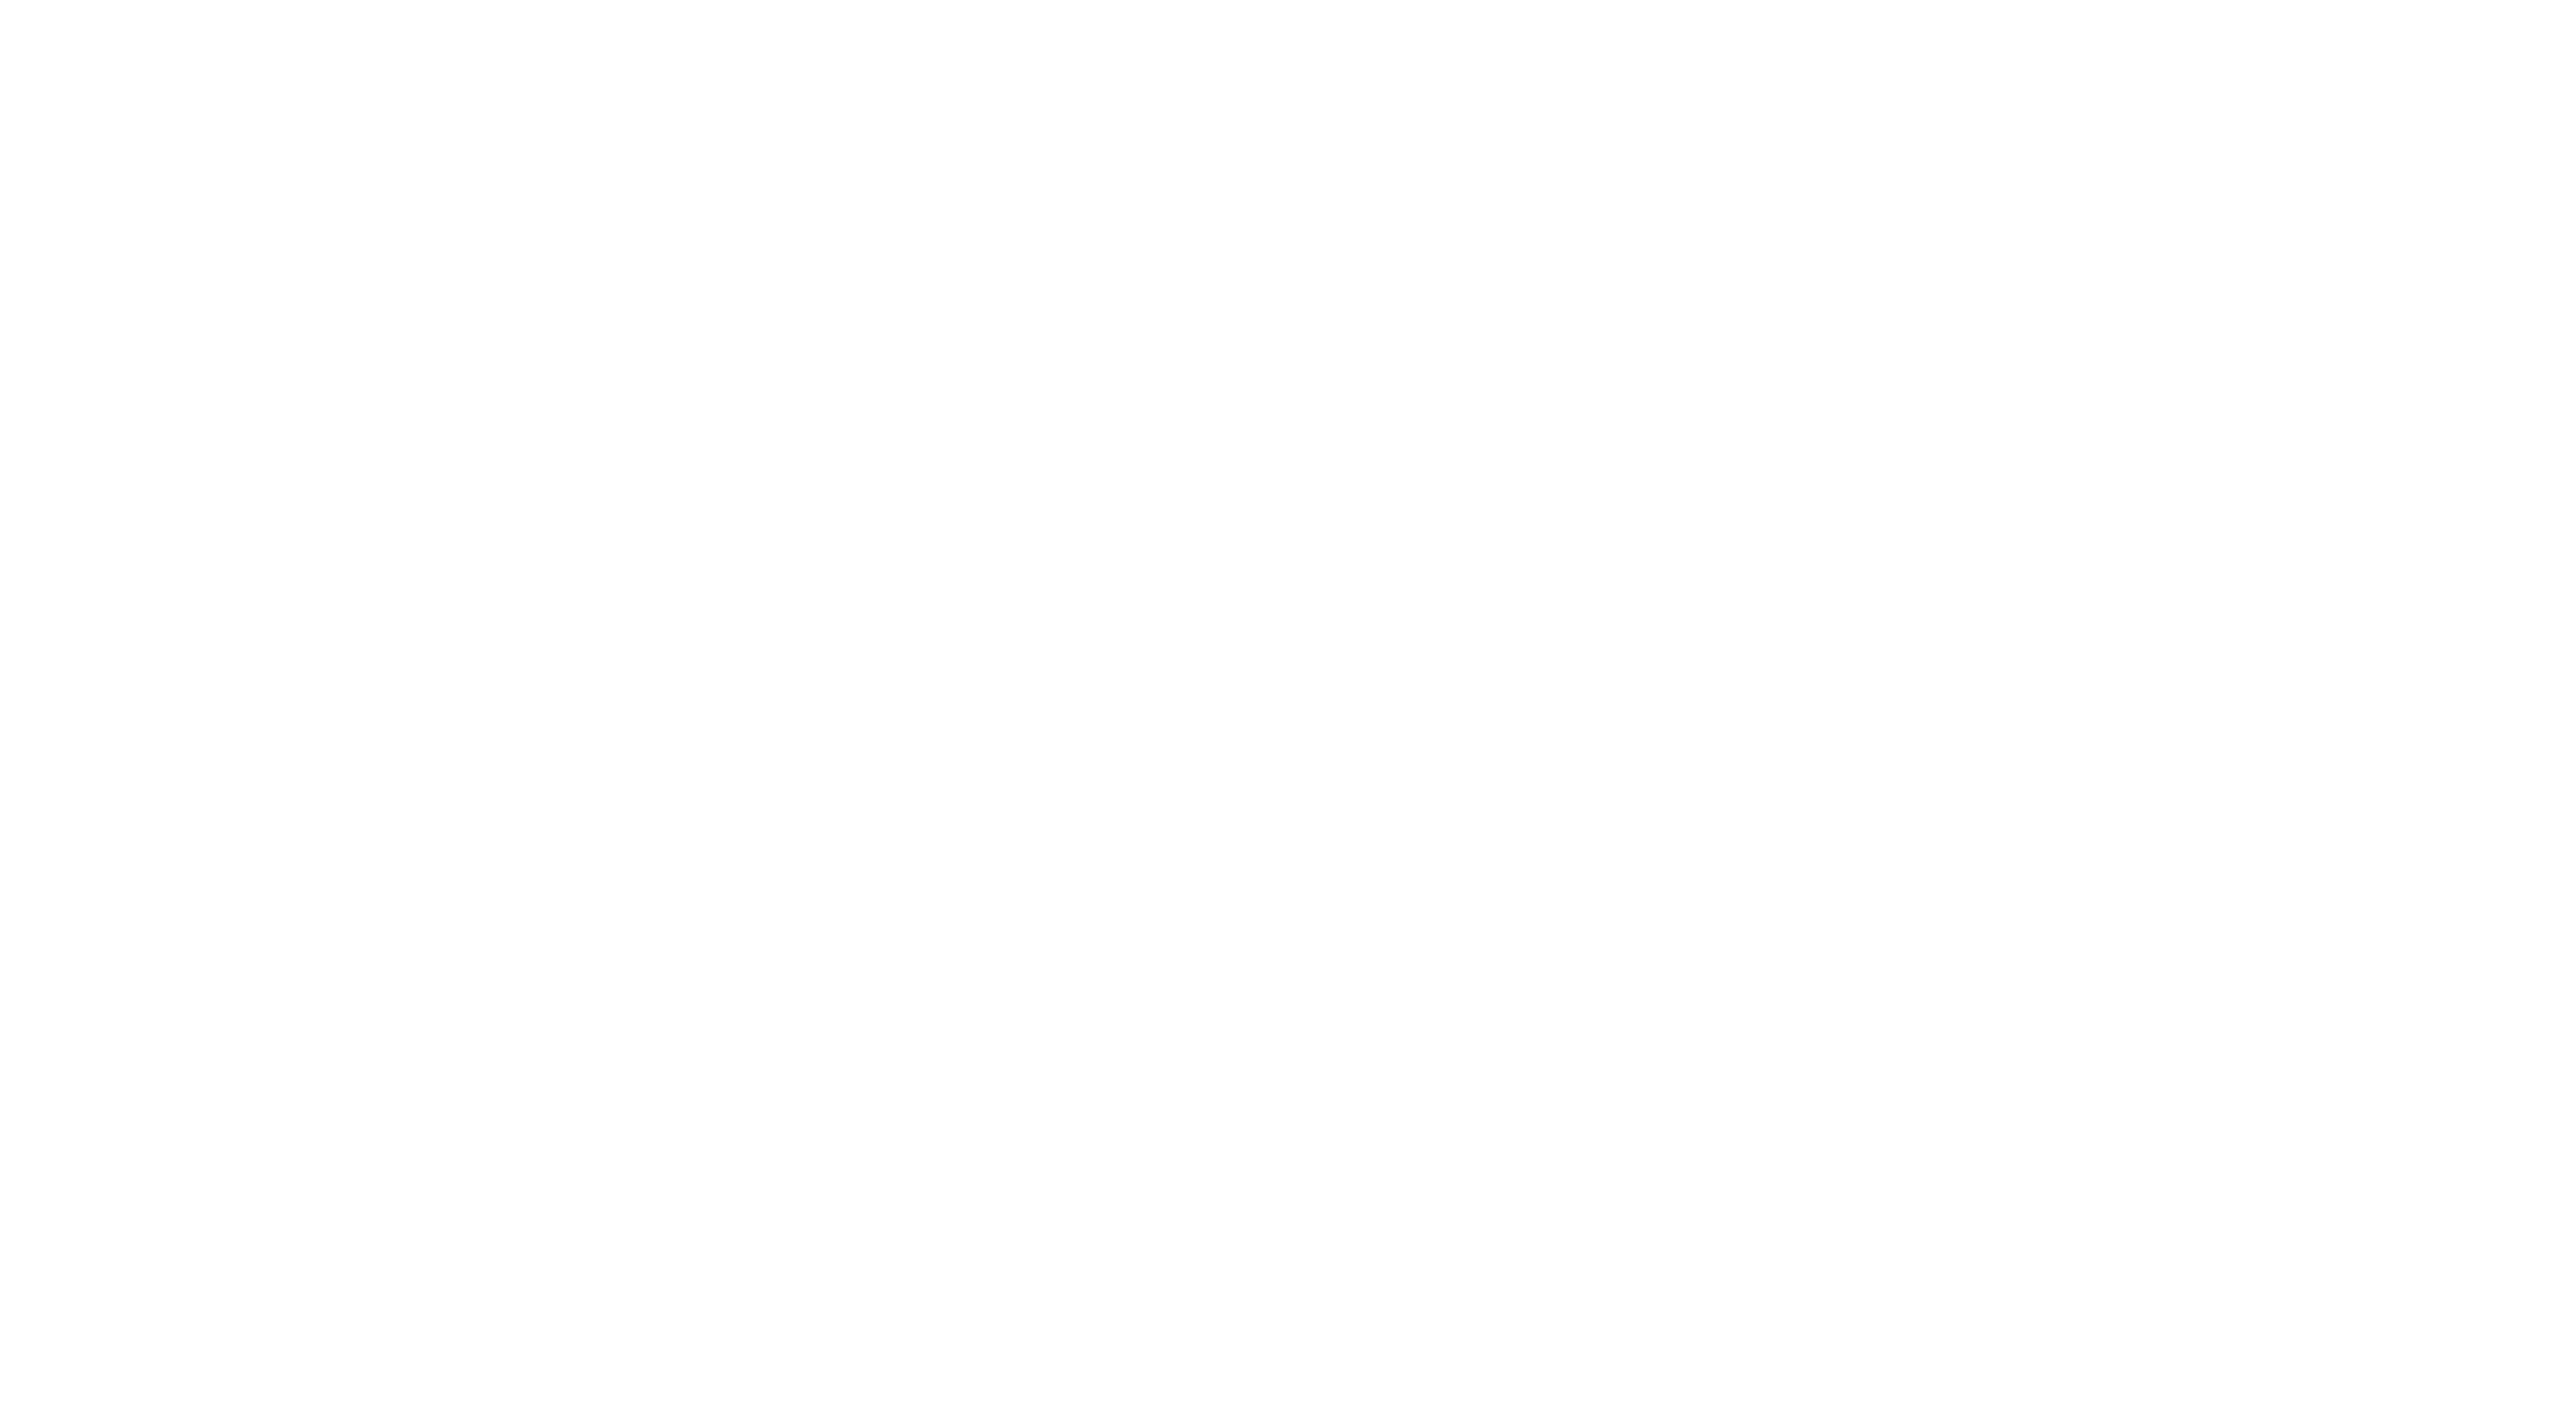 Innovative Iron